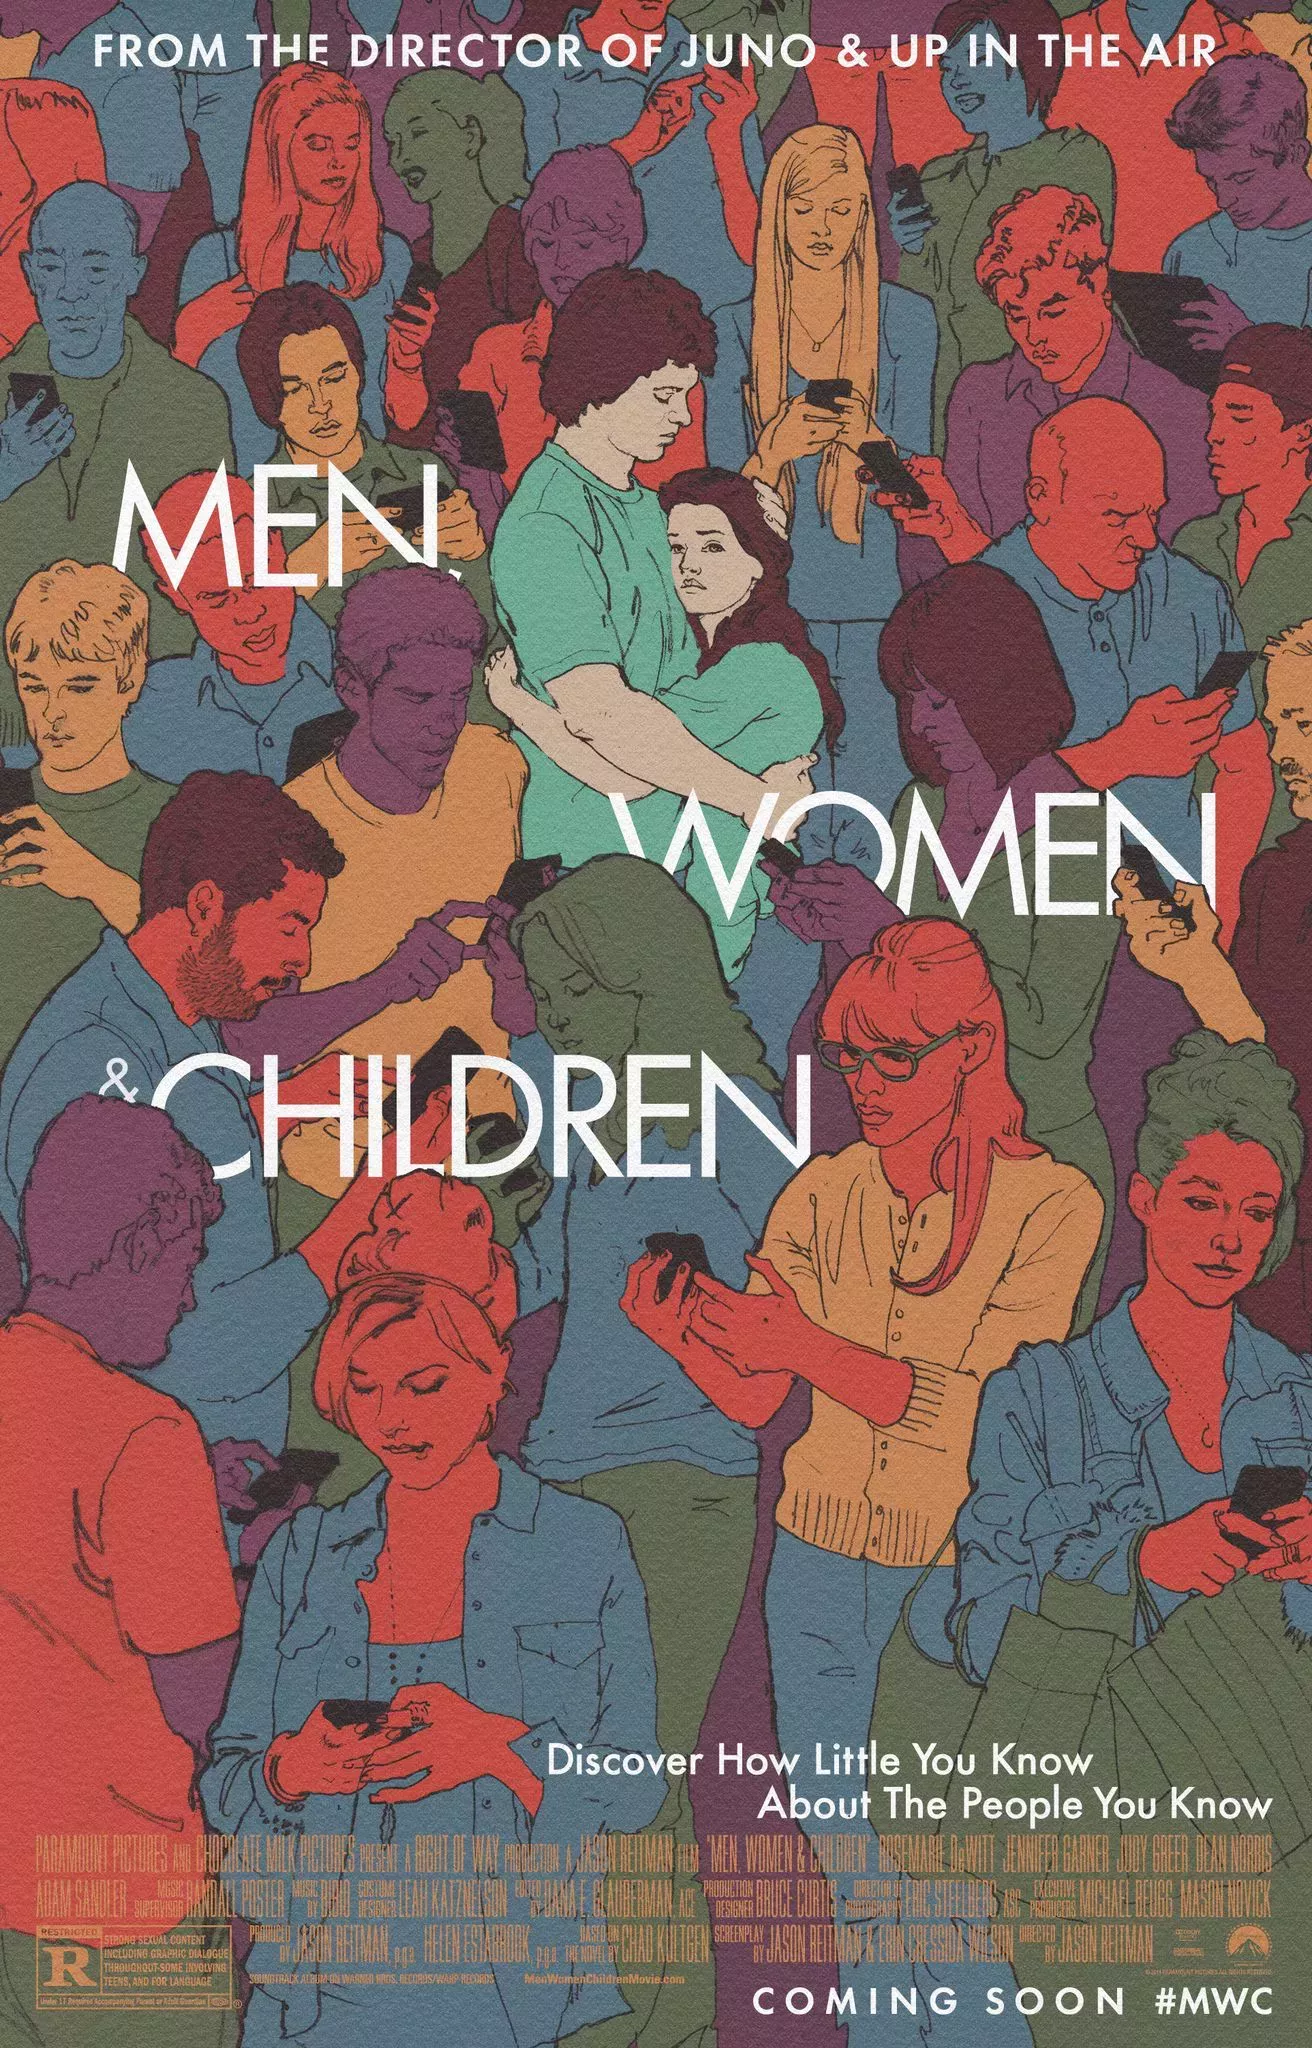 Men Women and Children 2014 Film Poster